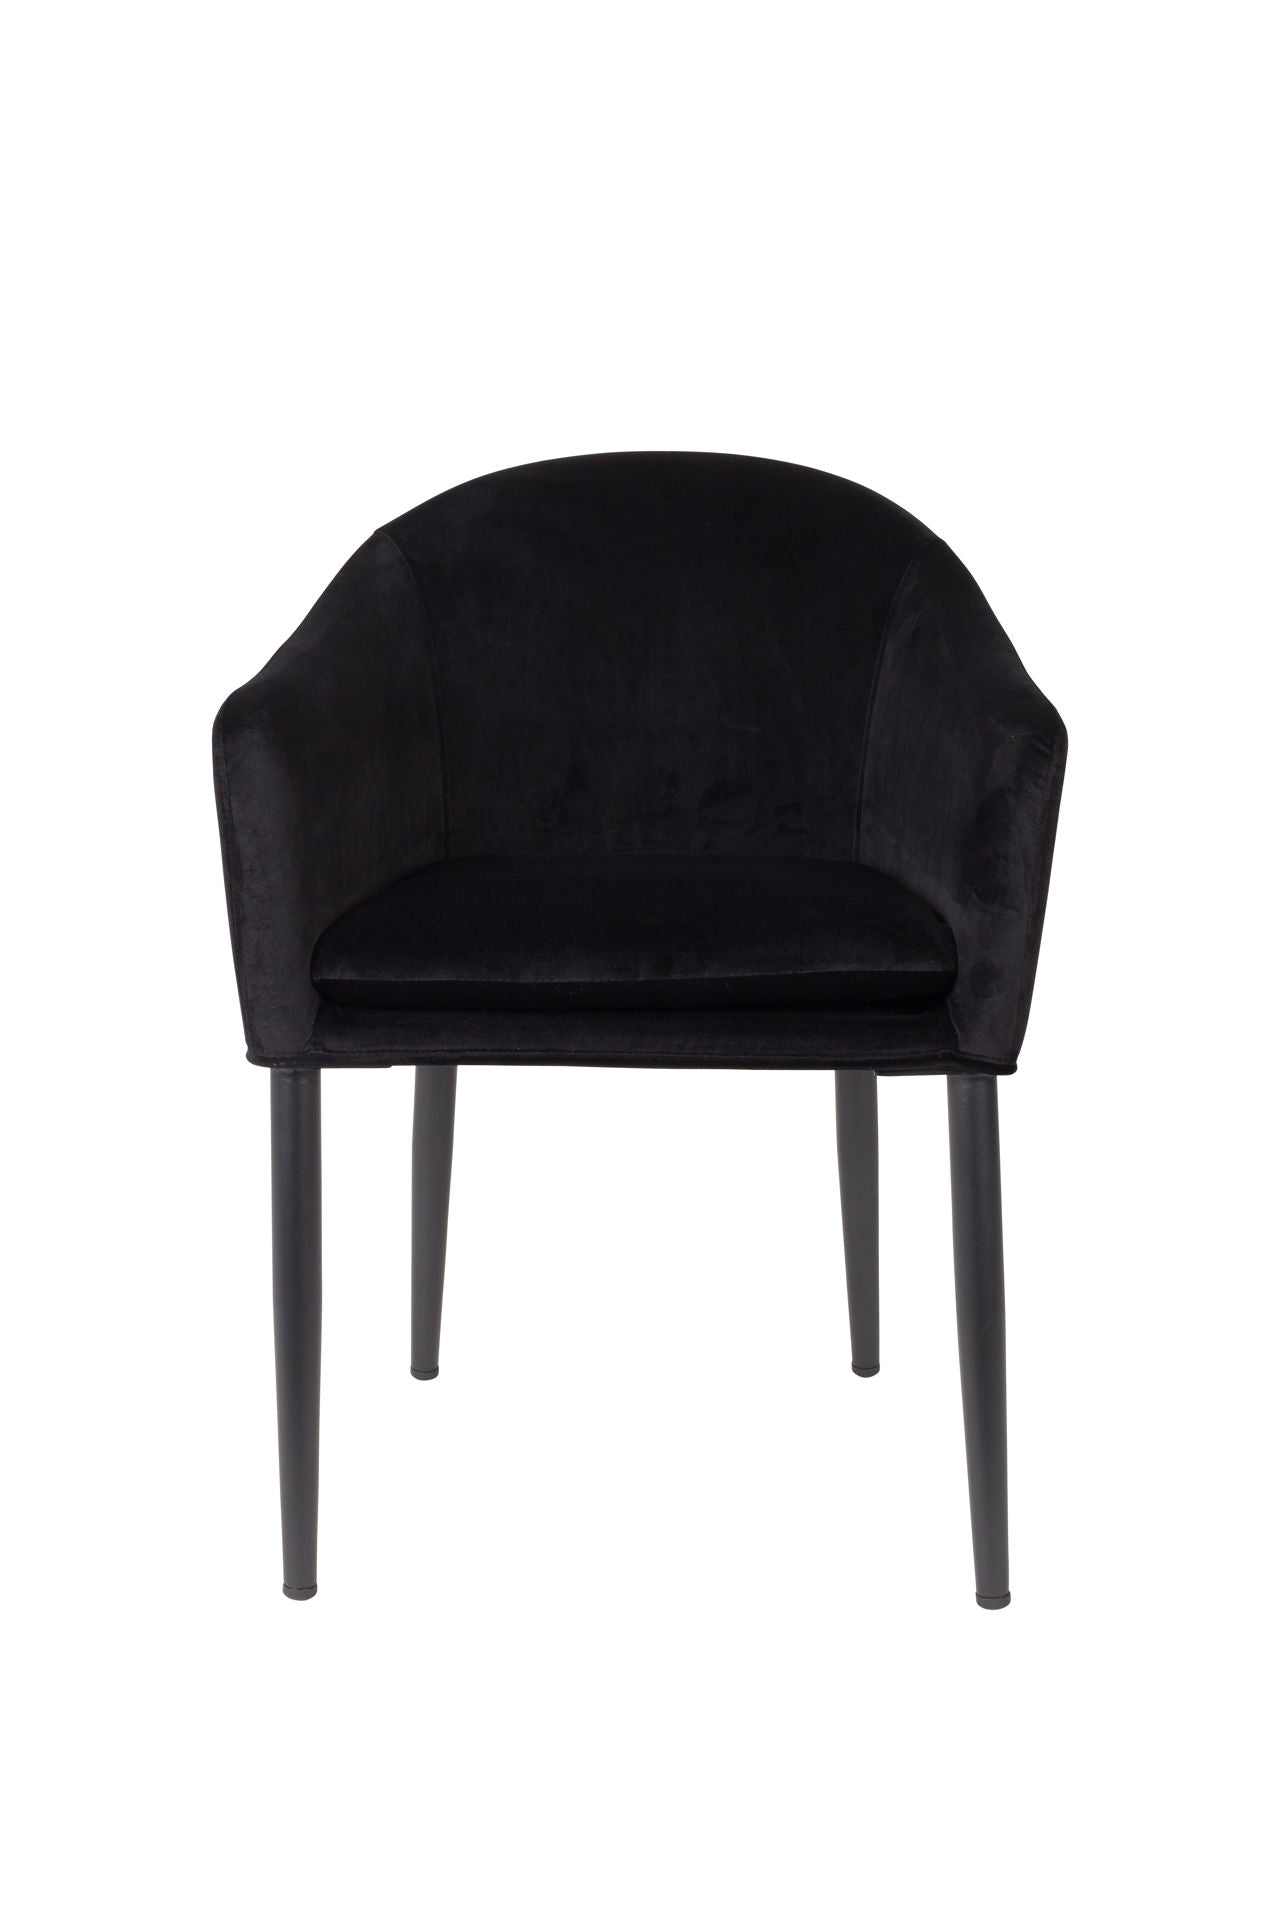 Nancy's Green Cove Springs Chair - Retro - Black - Velvet, Plywood, Steel - 55.5 cm x 57 cm x 77 cm